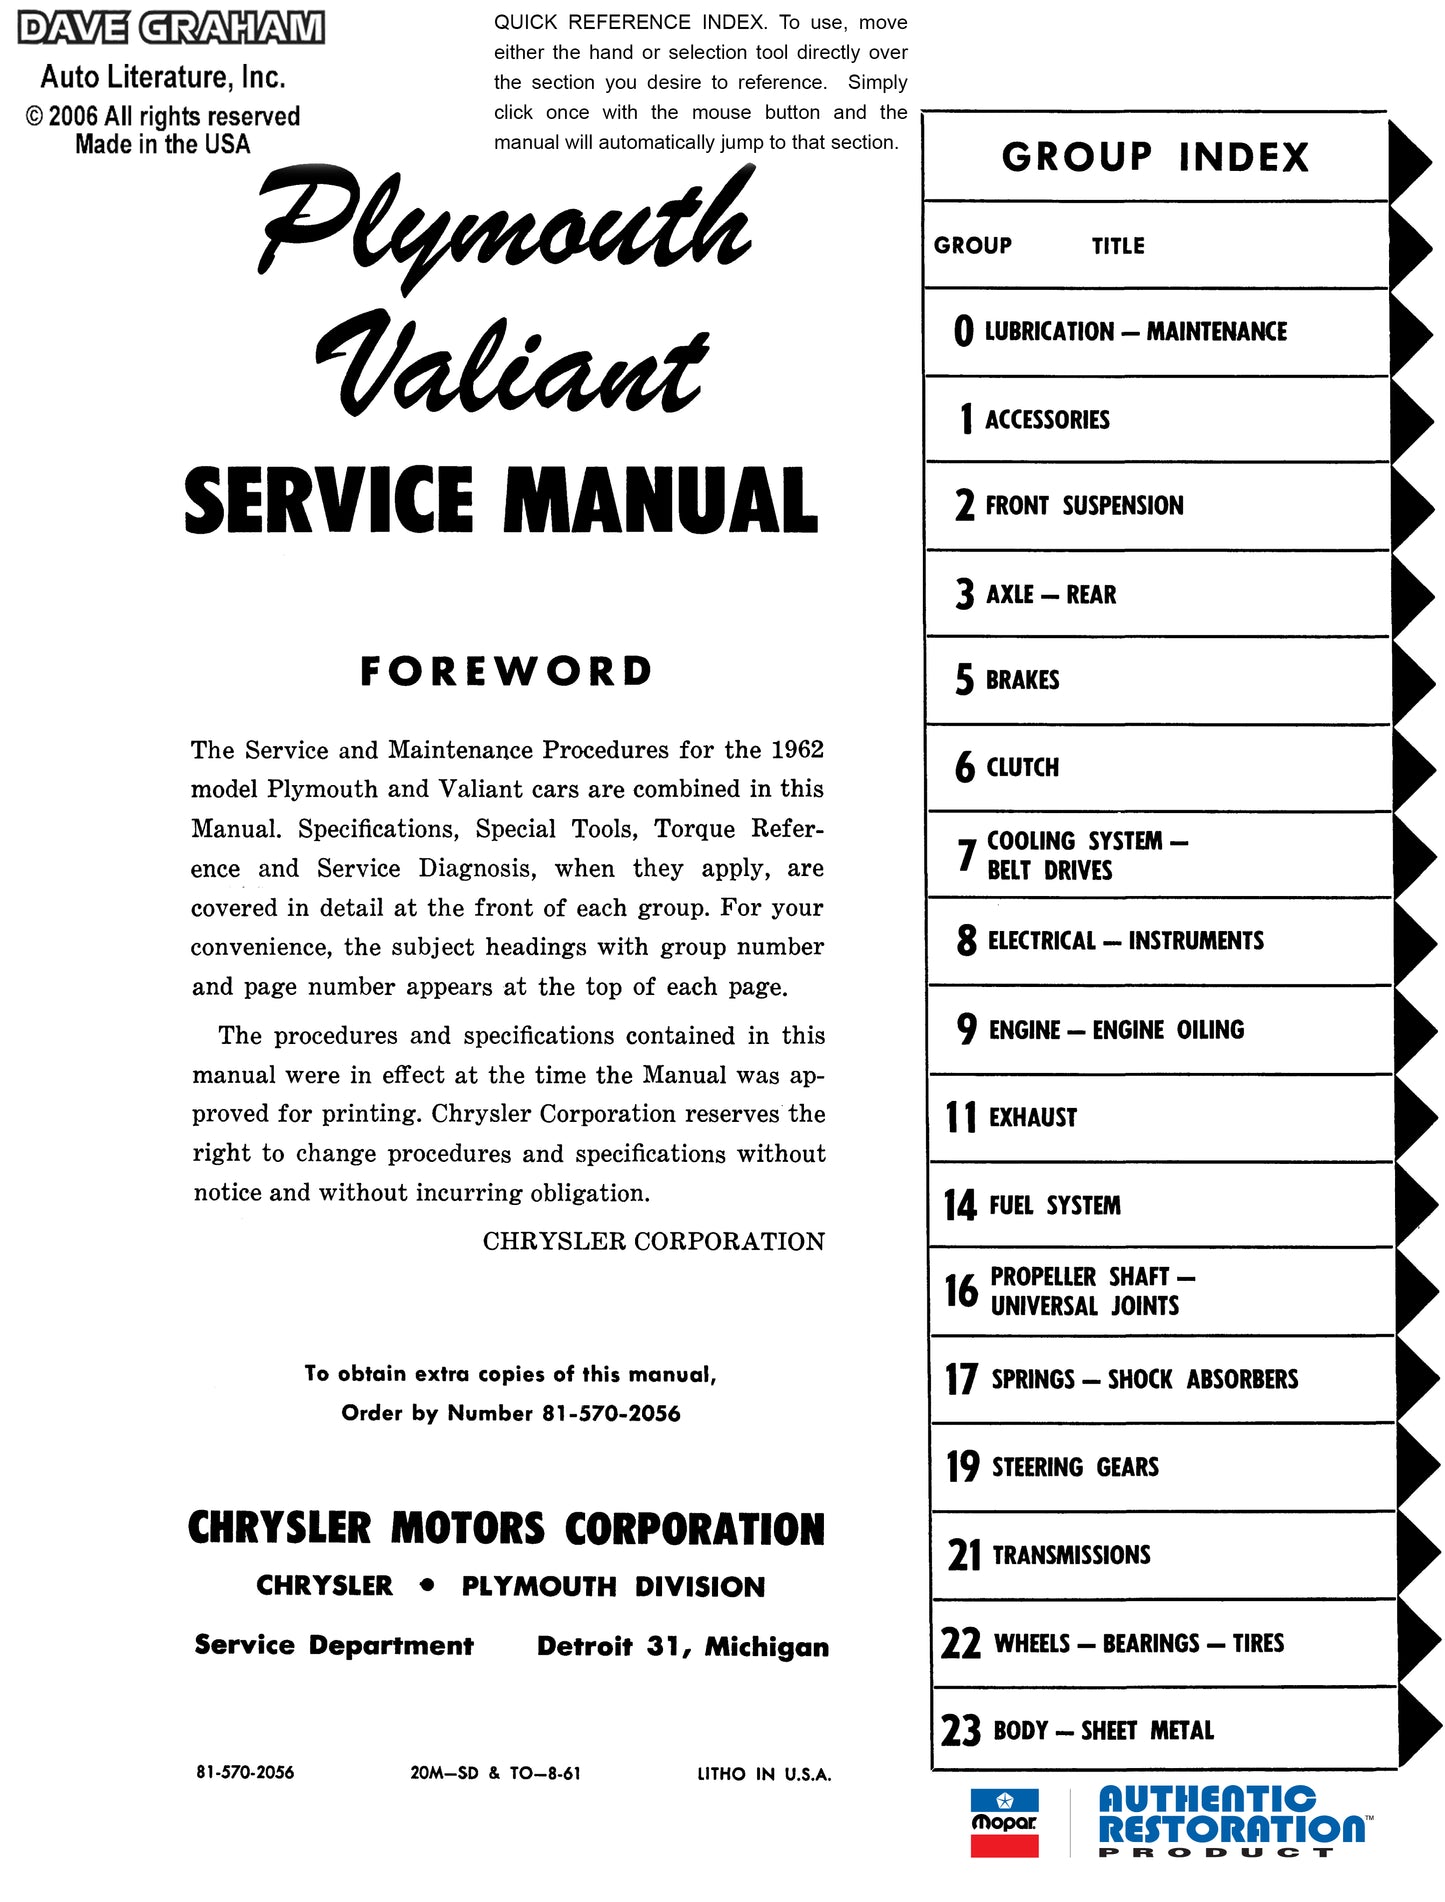 1962 Plymouth - Shop Manual